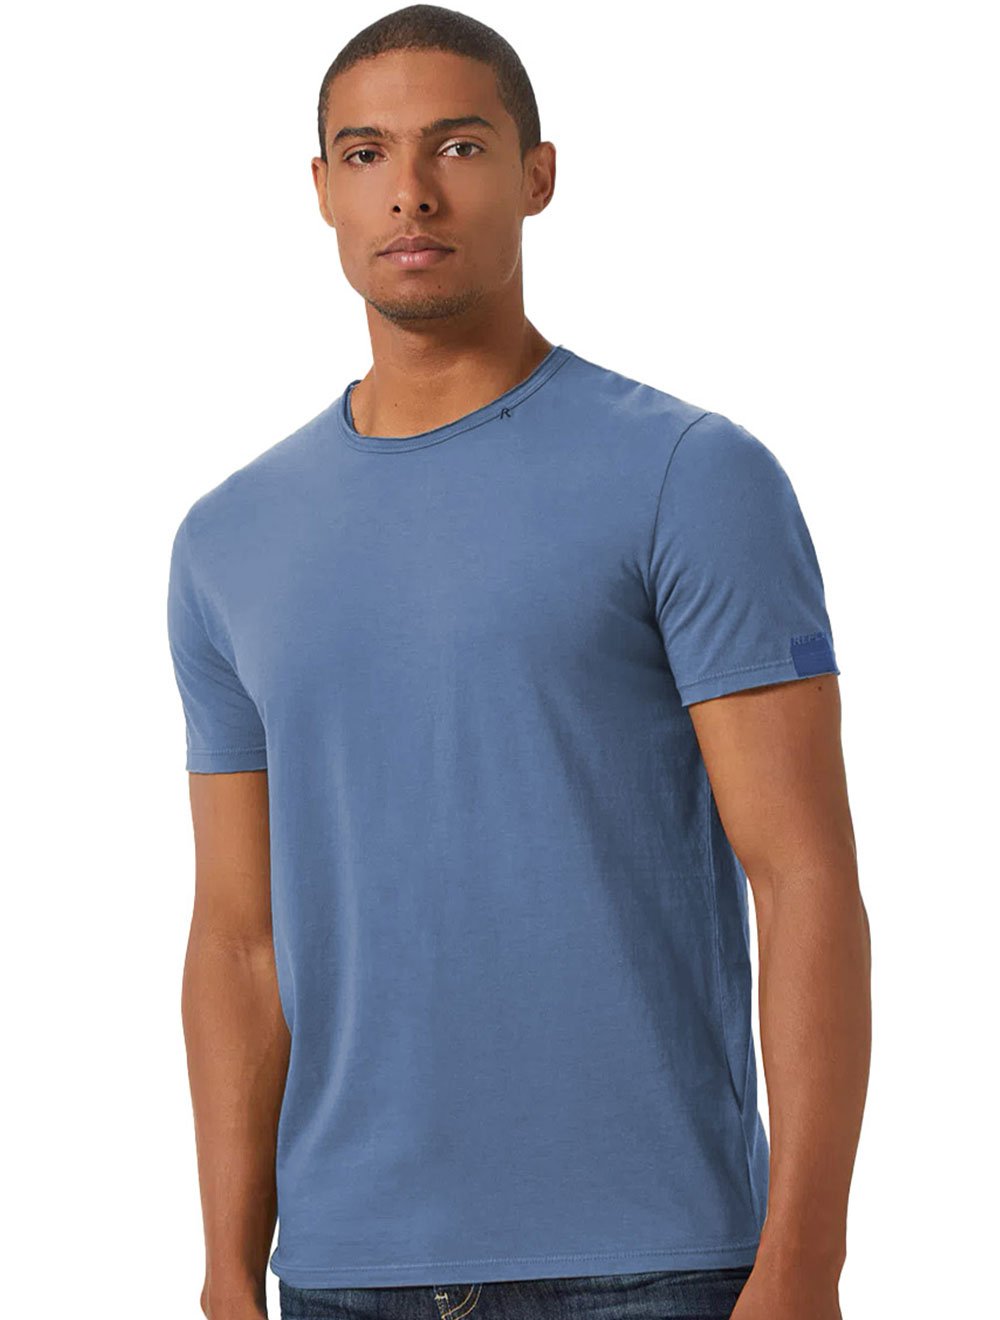 Camiseta Replay Masculina Basic Embroidered Logo Azul Claro